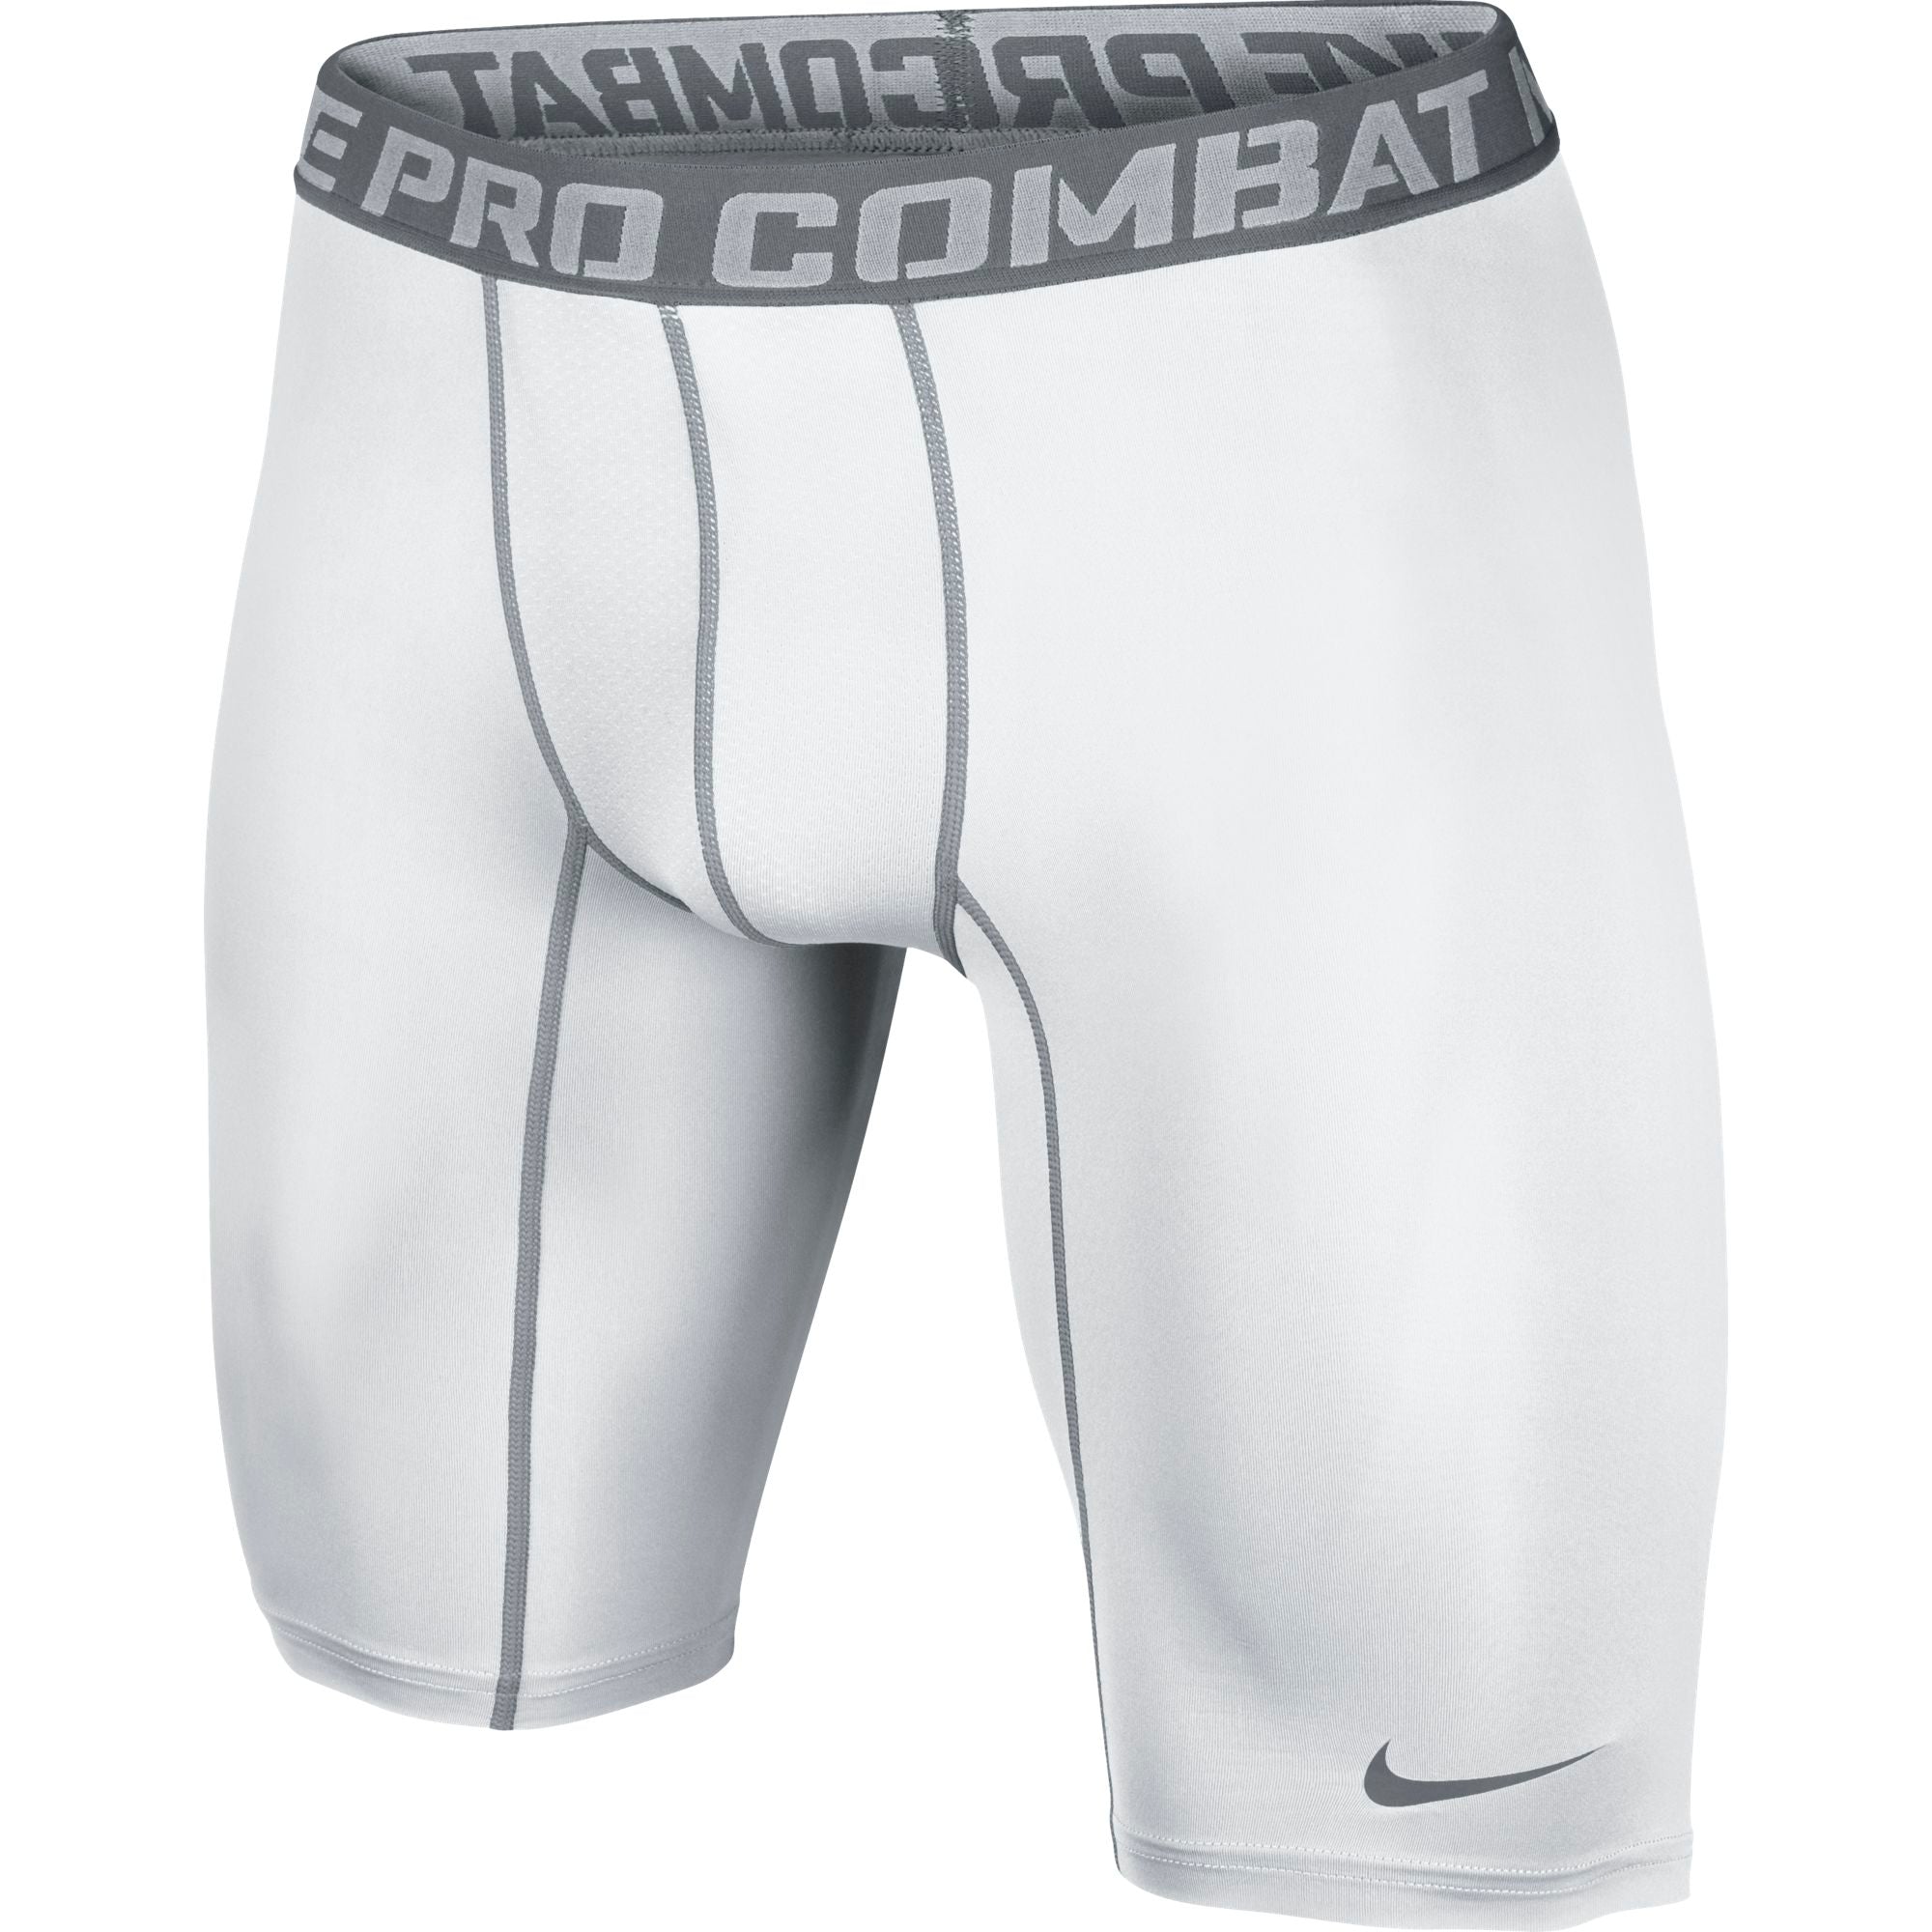 nike pro combat compression shorts 9 inch